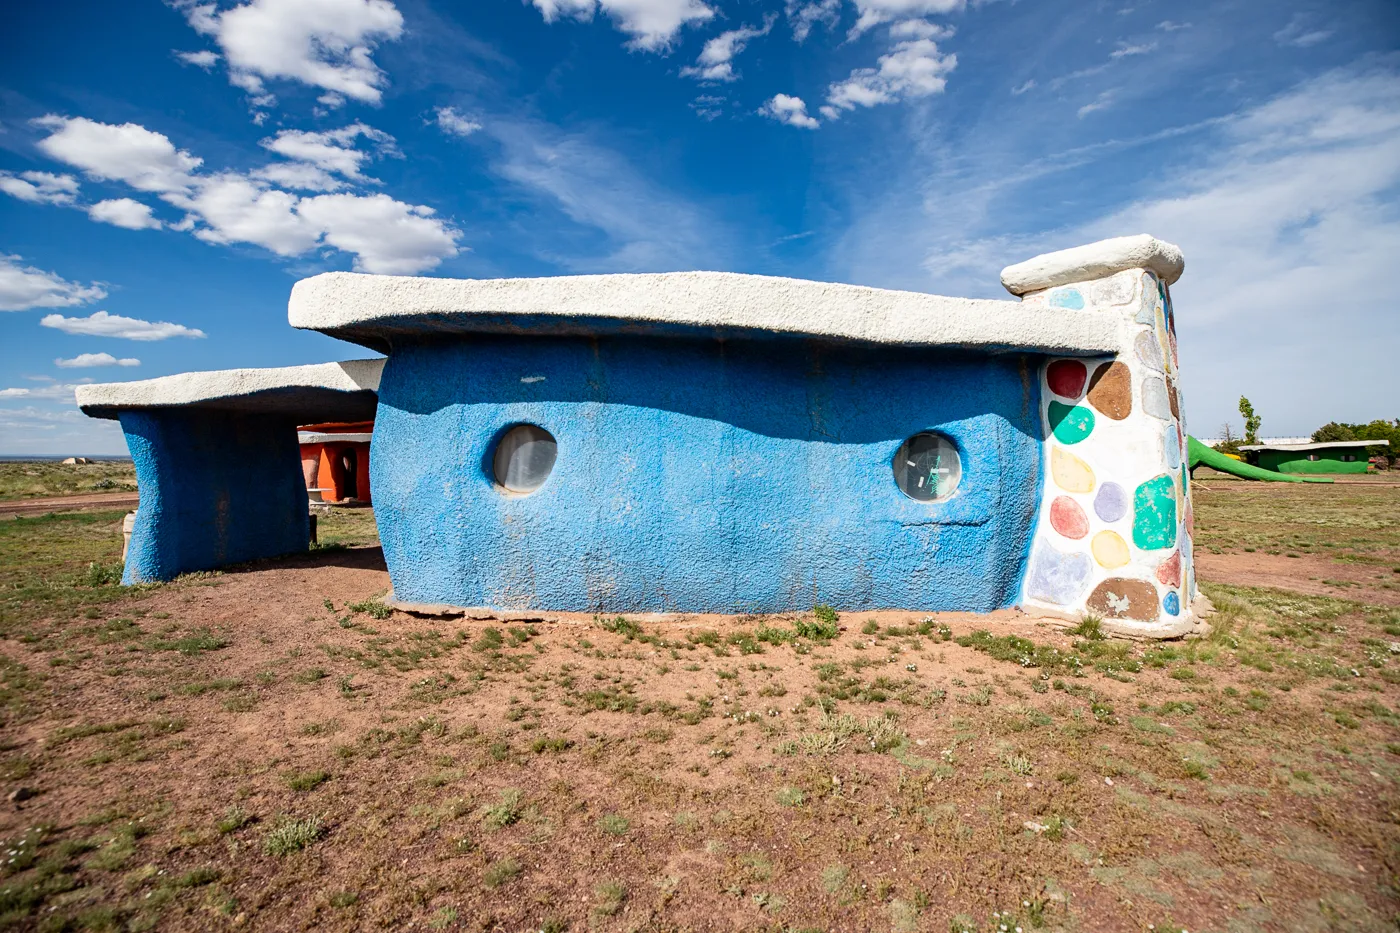 Fred's House at Flintstones Bedrock City in Williams, Arizona